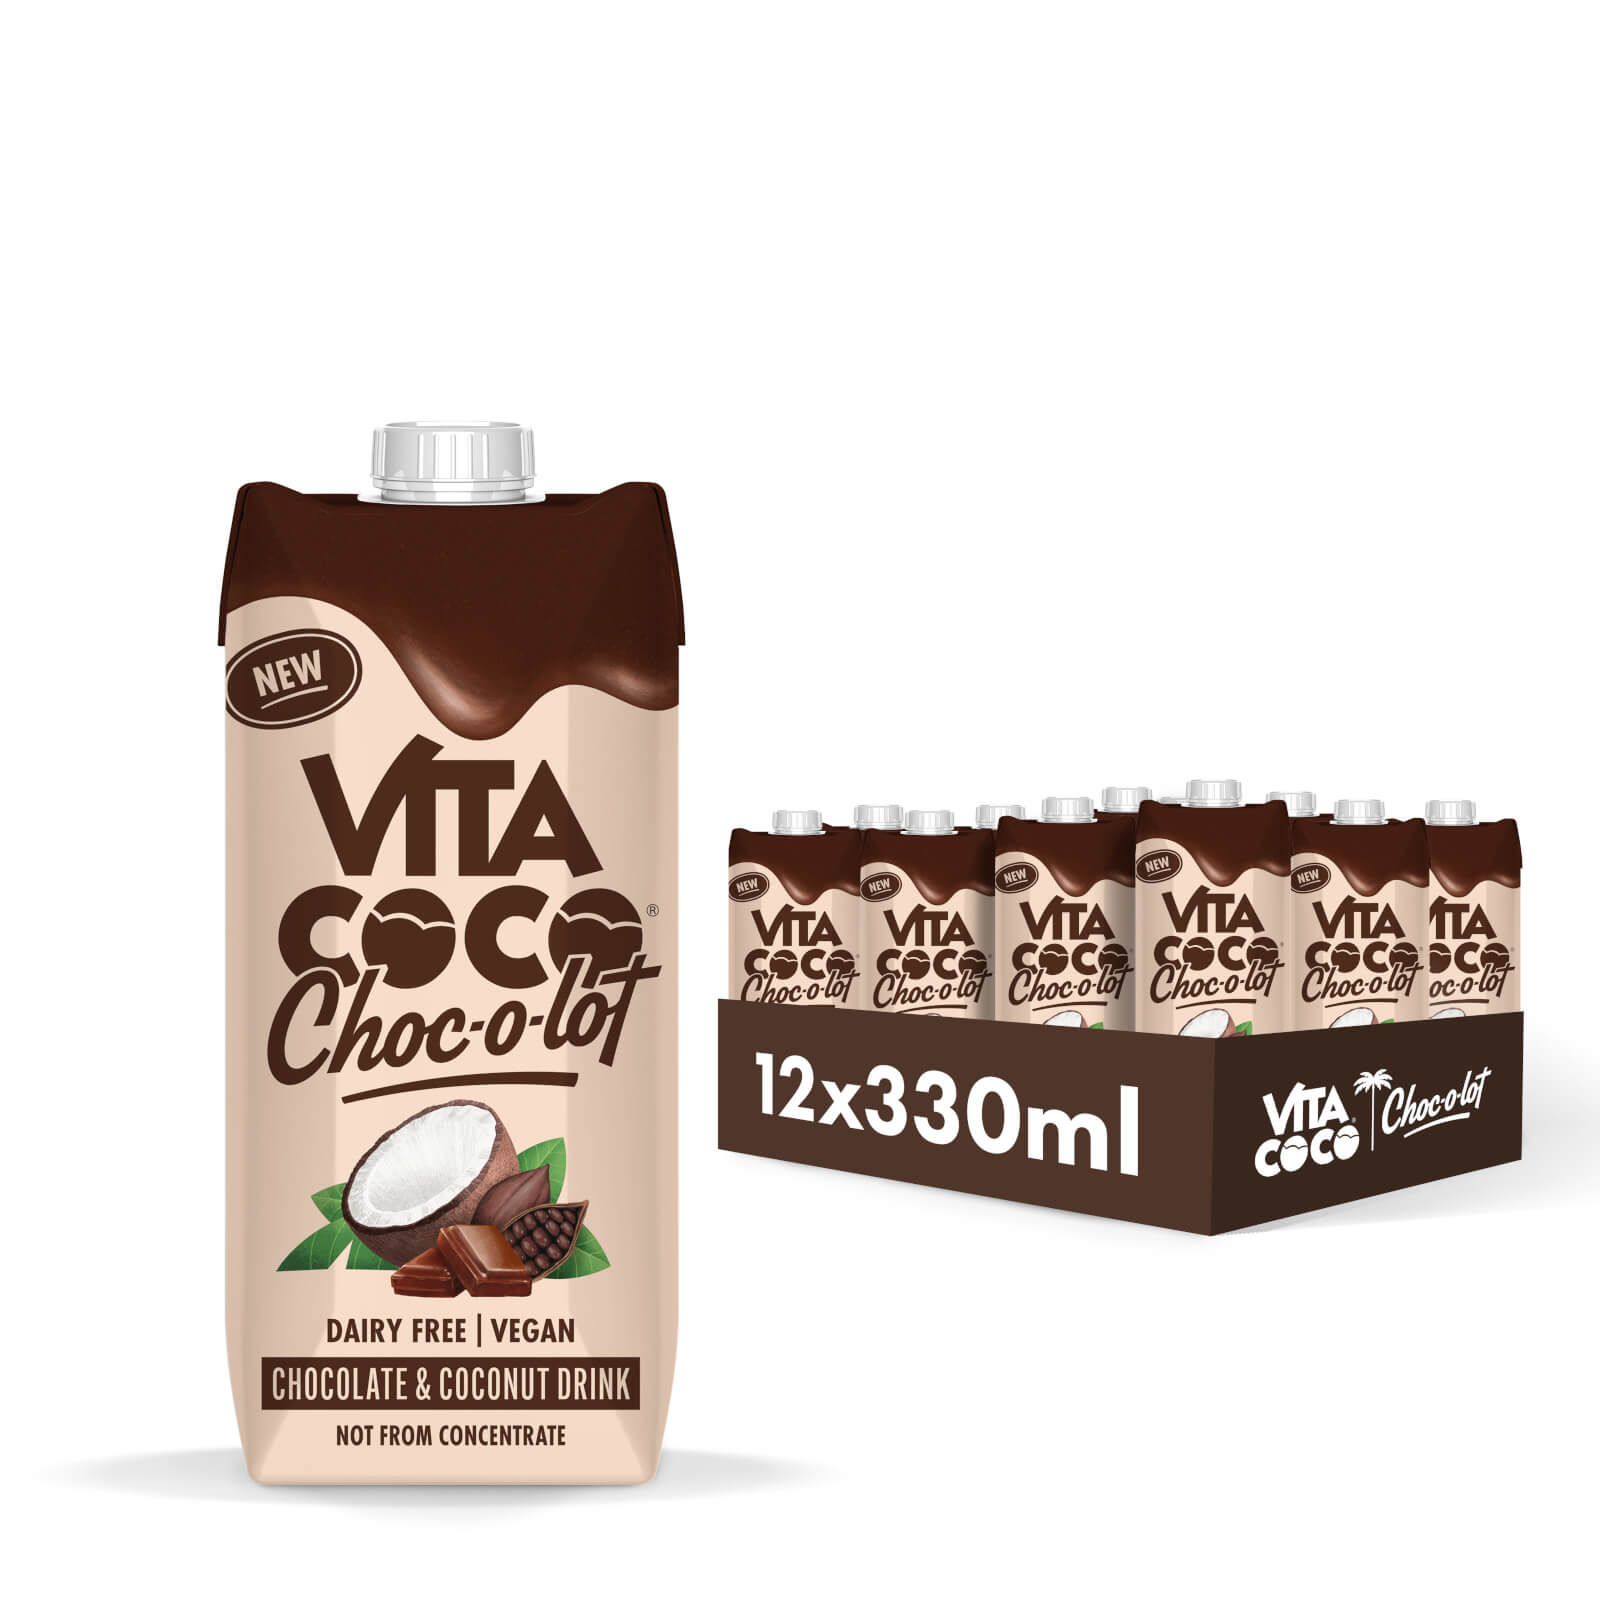 Choc-o-lot Chocolate & Coconut Drink, 12 x 330ml